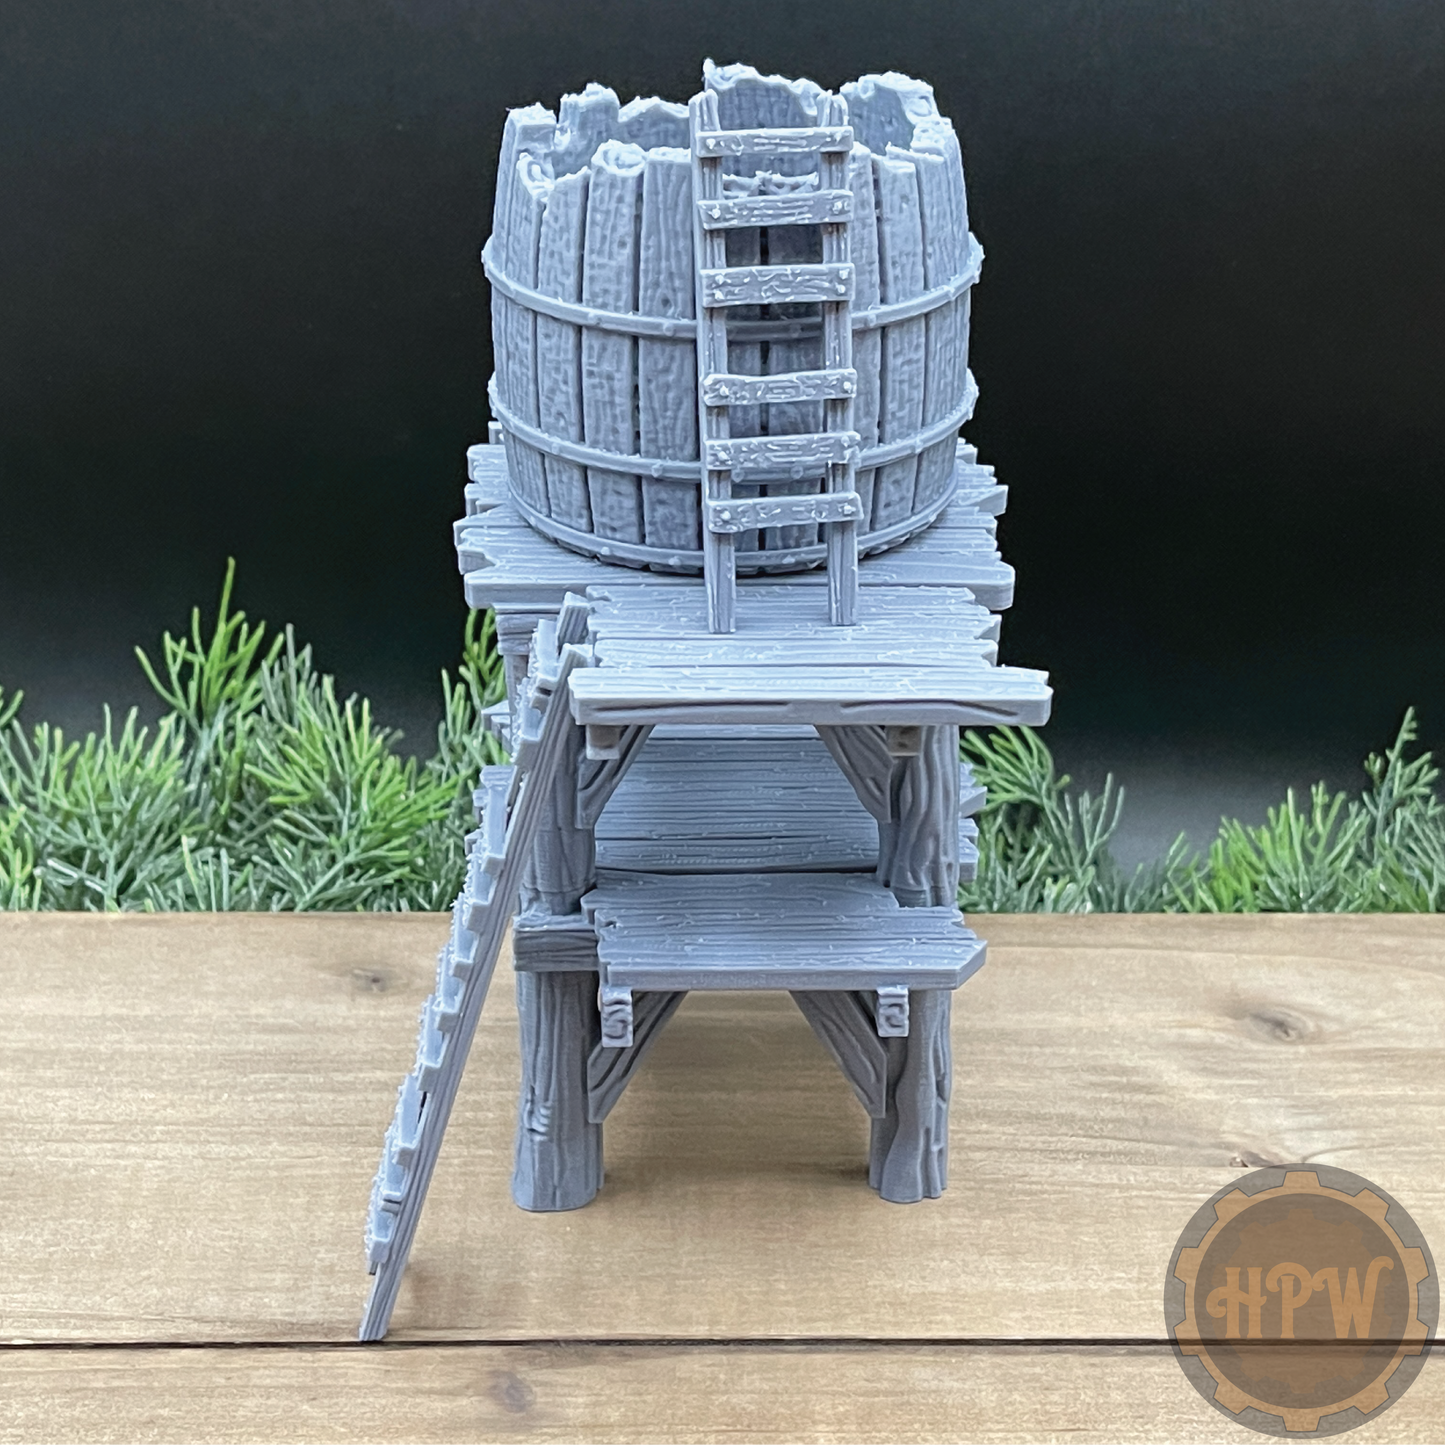 Water Tower | Rain Catcher | Miniature Gaming Terrain Kit | GameScape3D | Sea Stack Cove